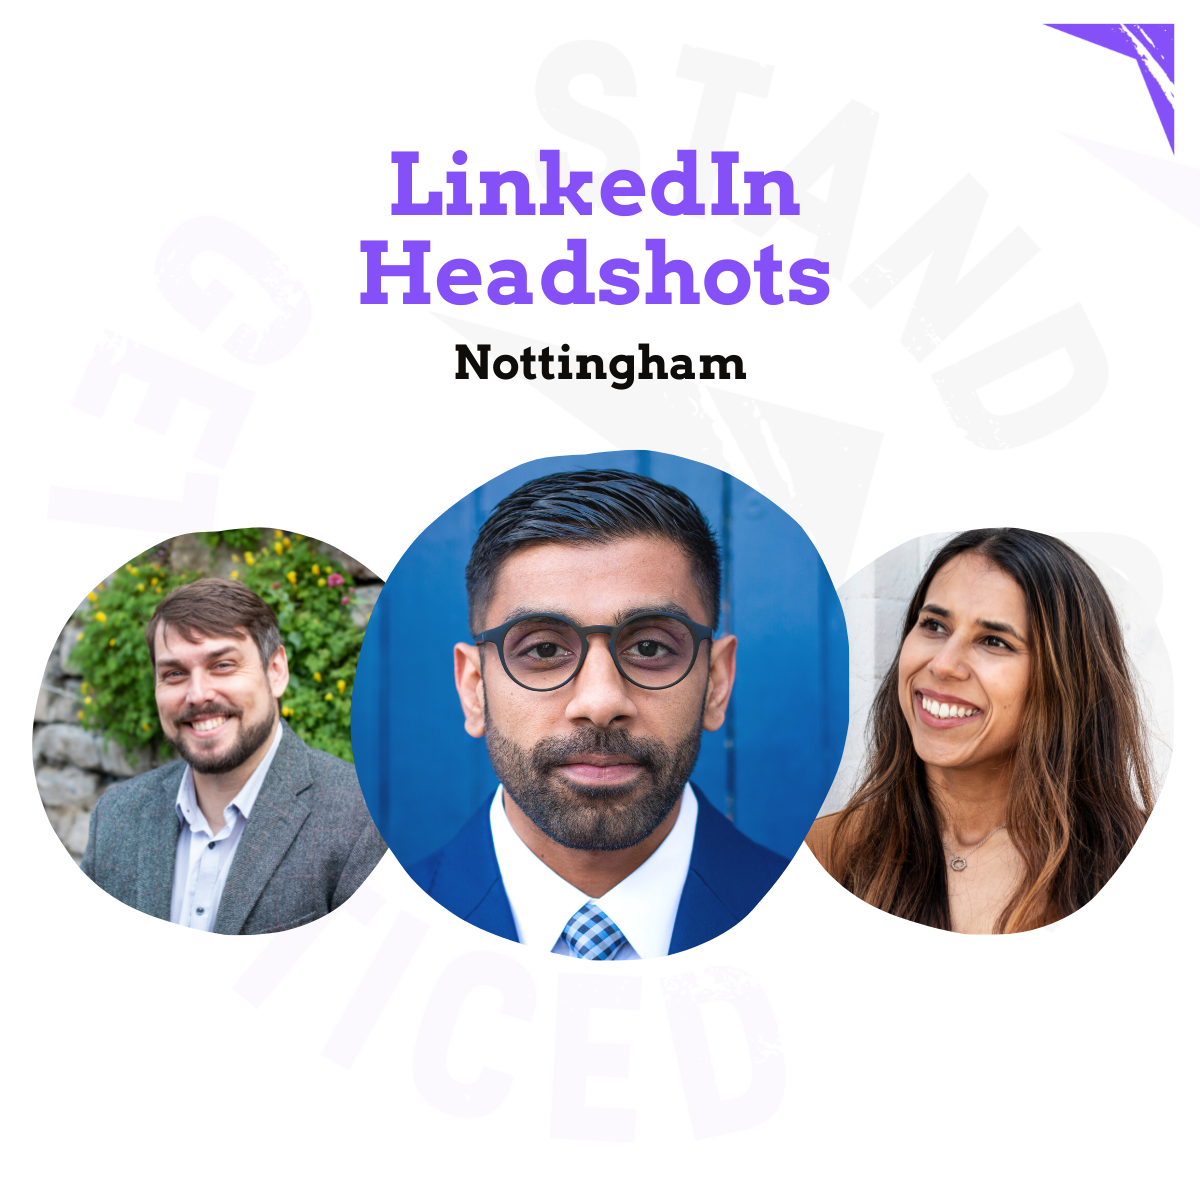 LinkedIn Headshots Nottingham